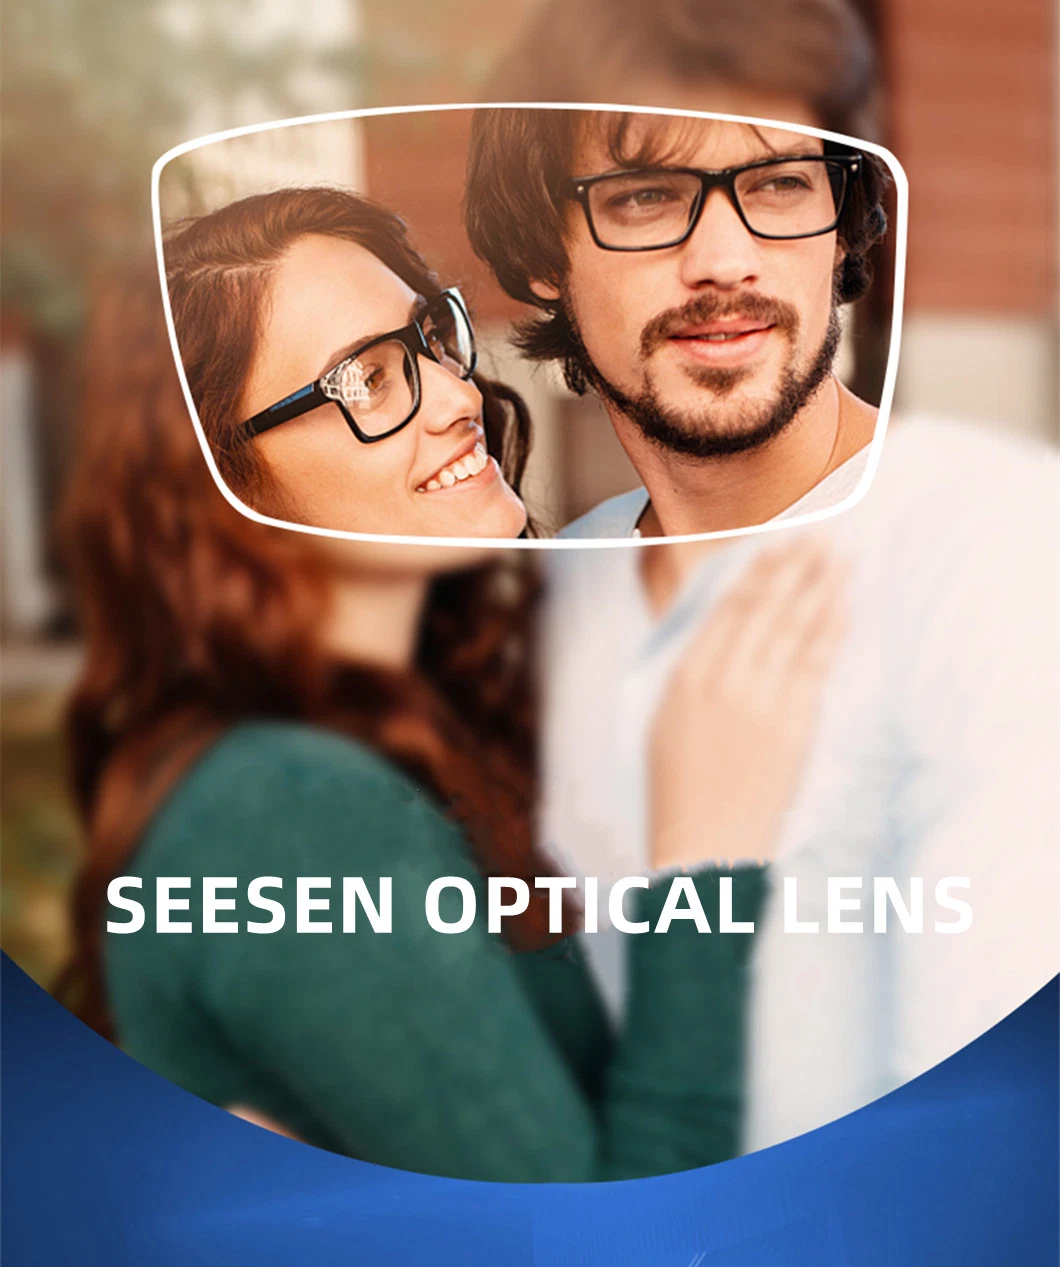 Seesen Factory Quality Optical Lens 1.56 Photochromic Progressive Spectacle Lenses Manufacturers